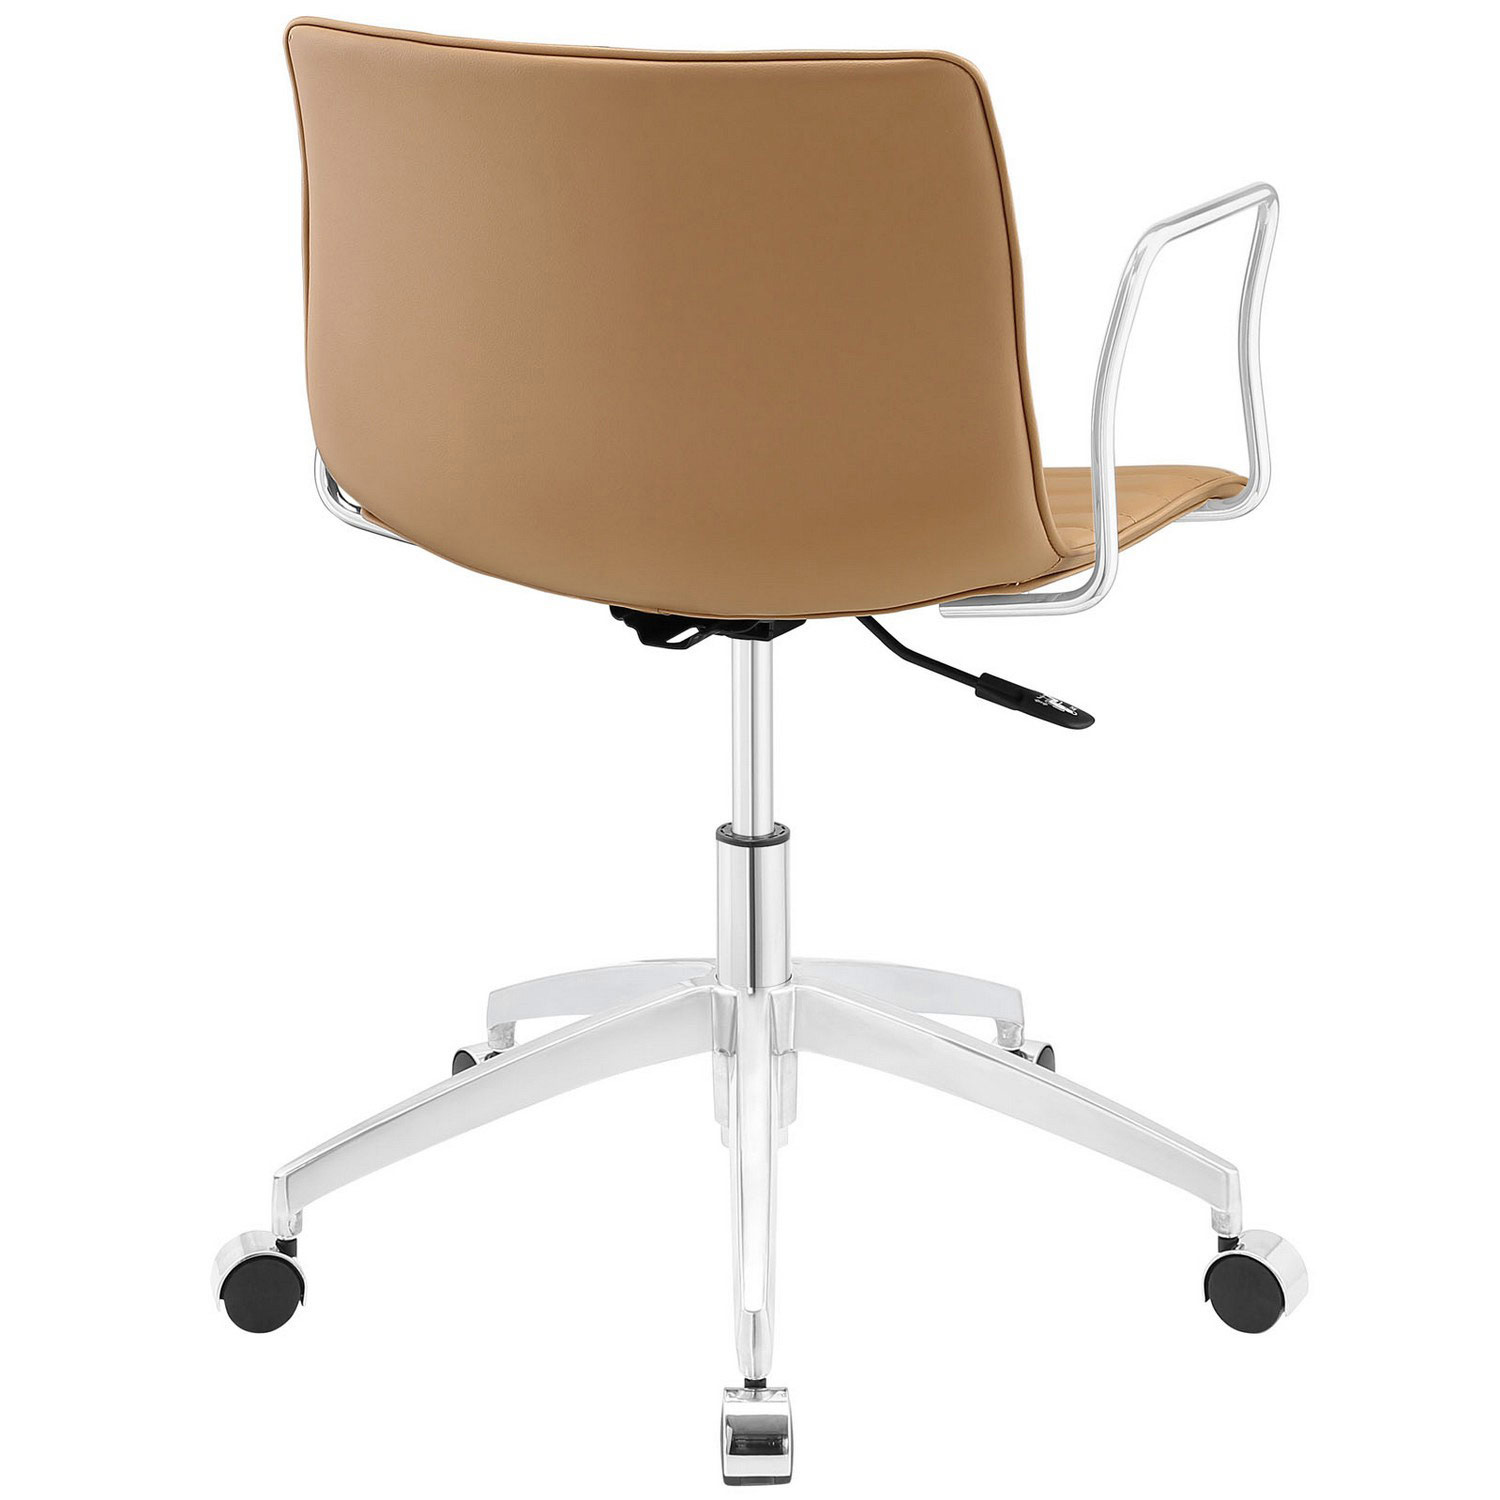 Modway Celerity Office Chair - Tan